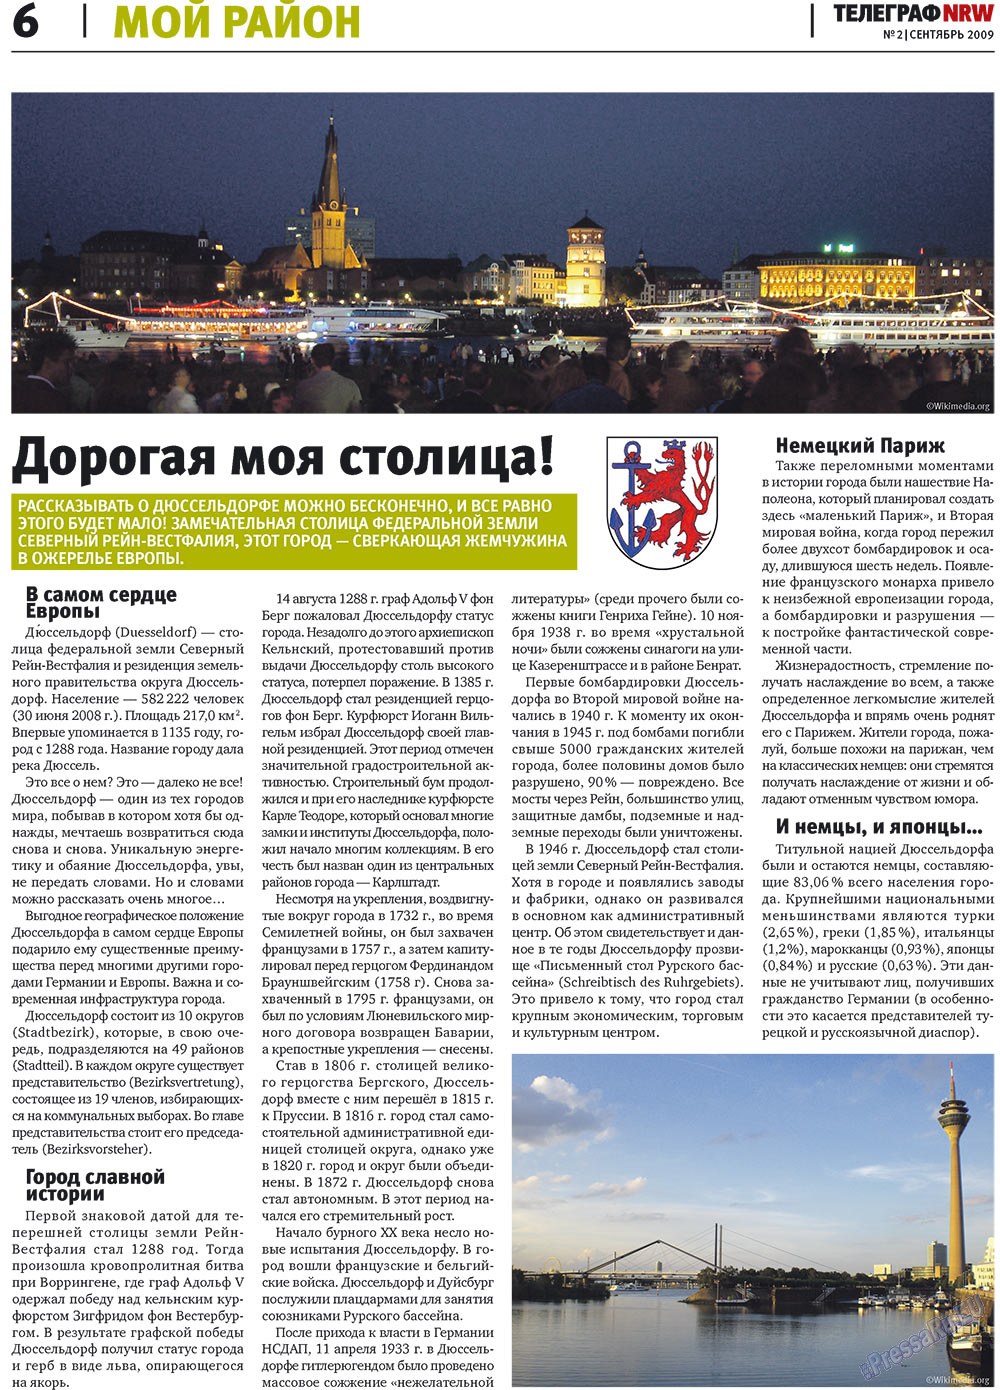 Телеграф NRW, газета. 2009 №2 стр.6